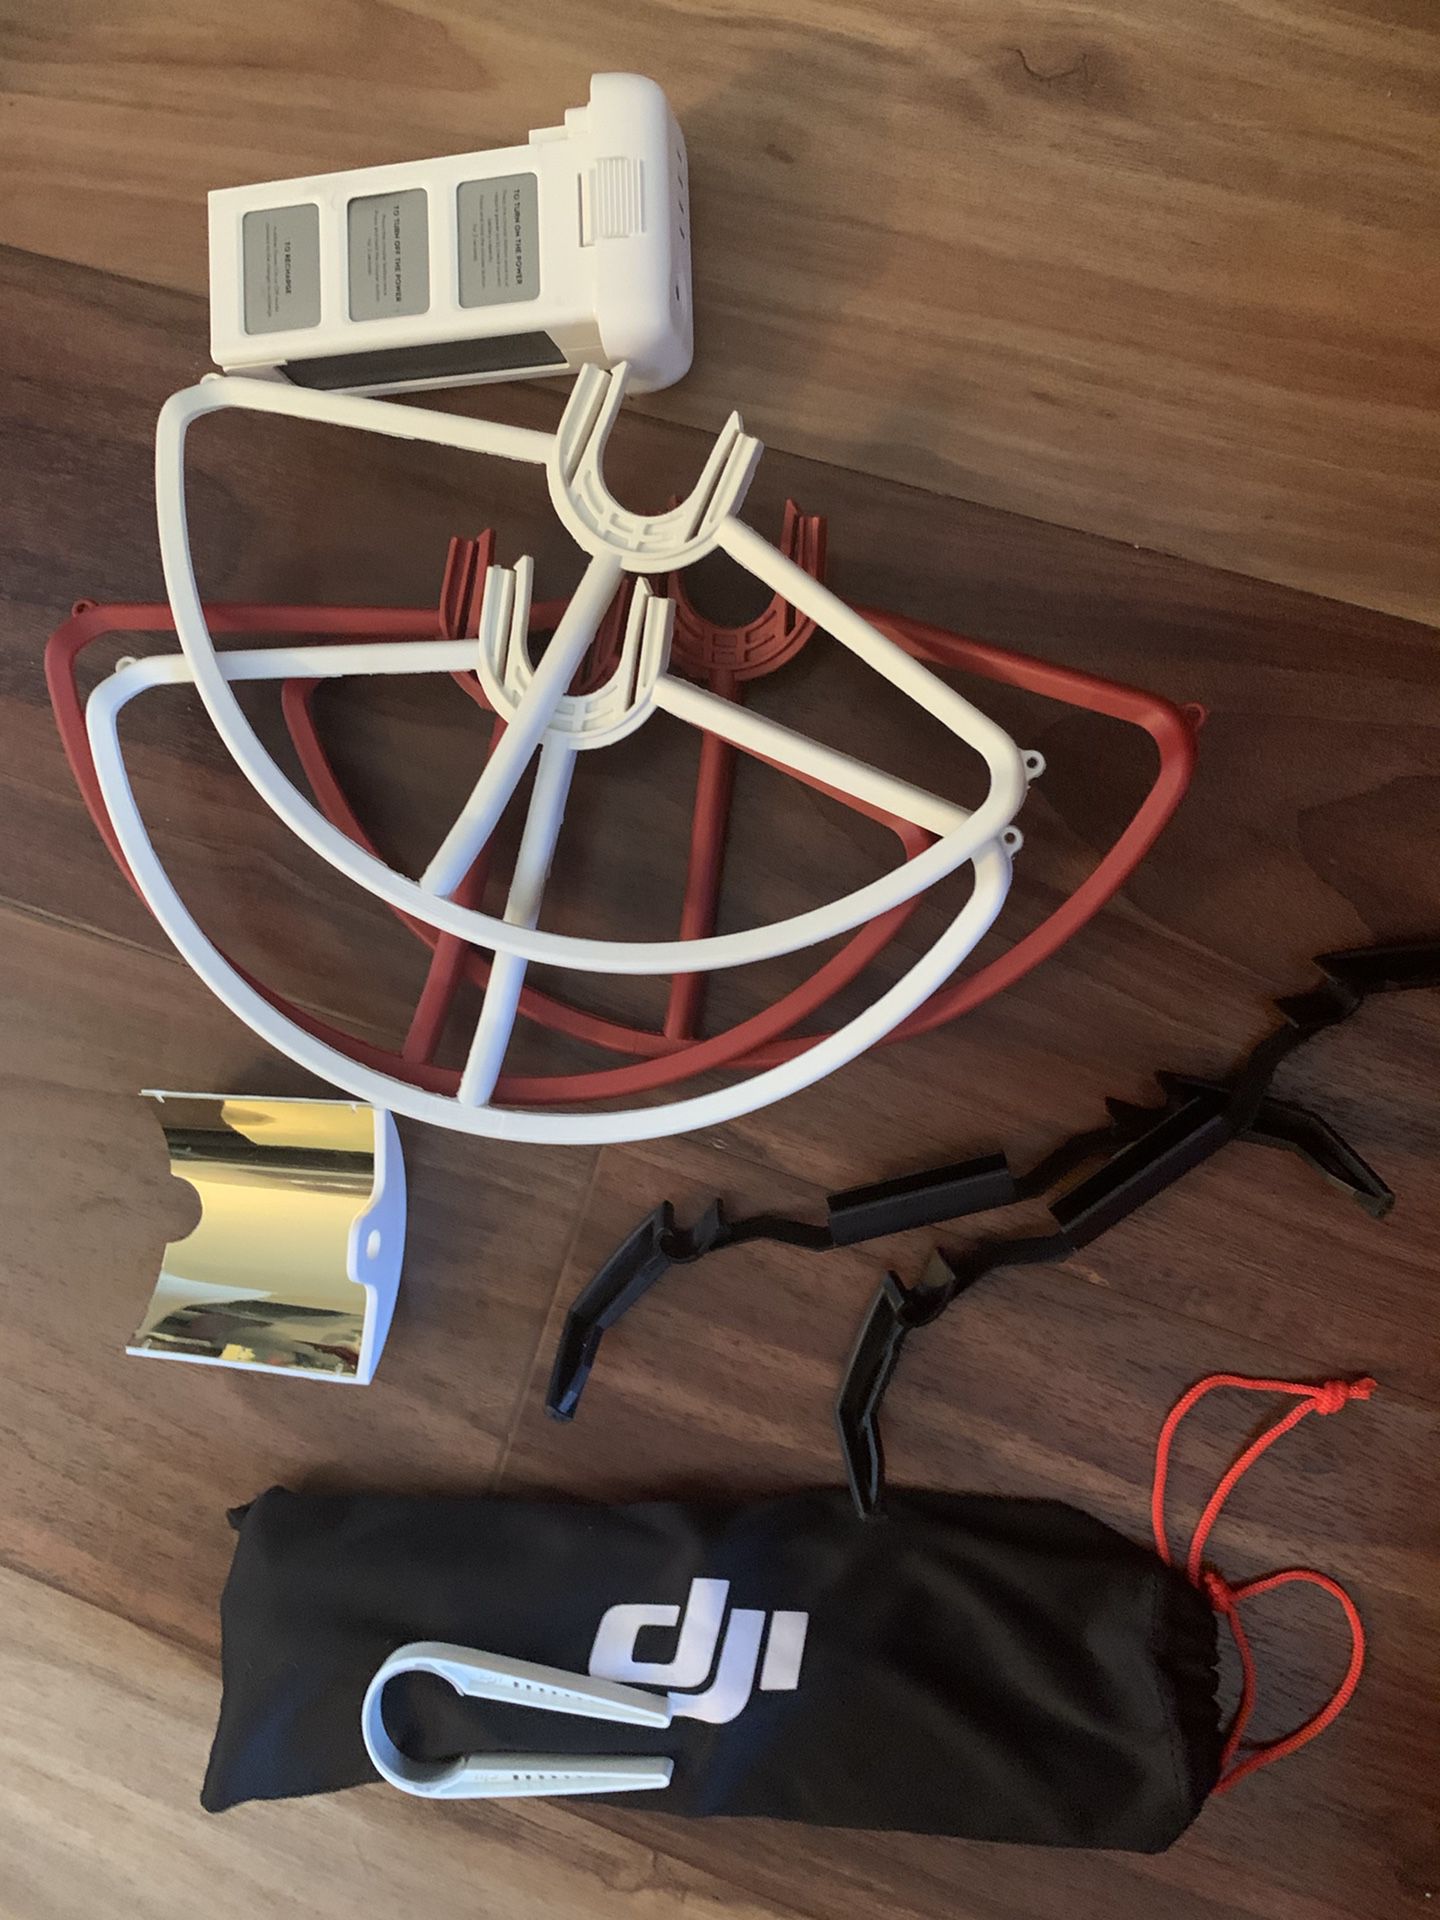 DJI Phantom 3 Standard Drone With Accessories